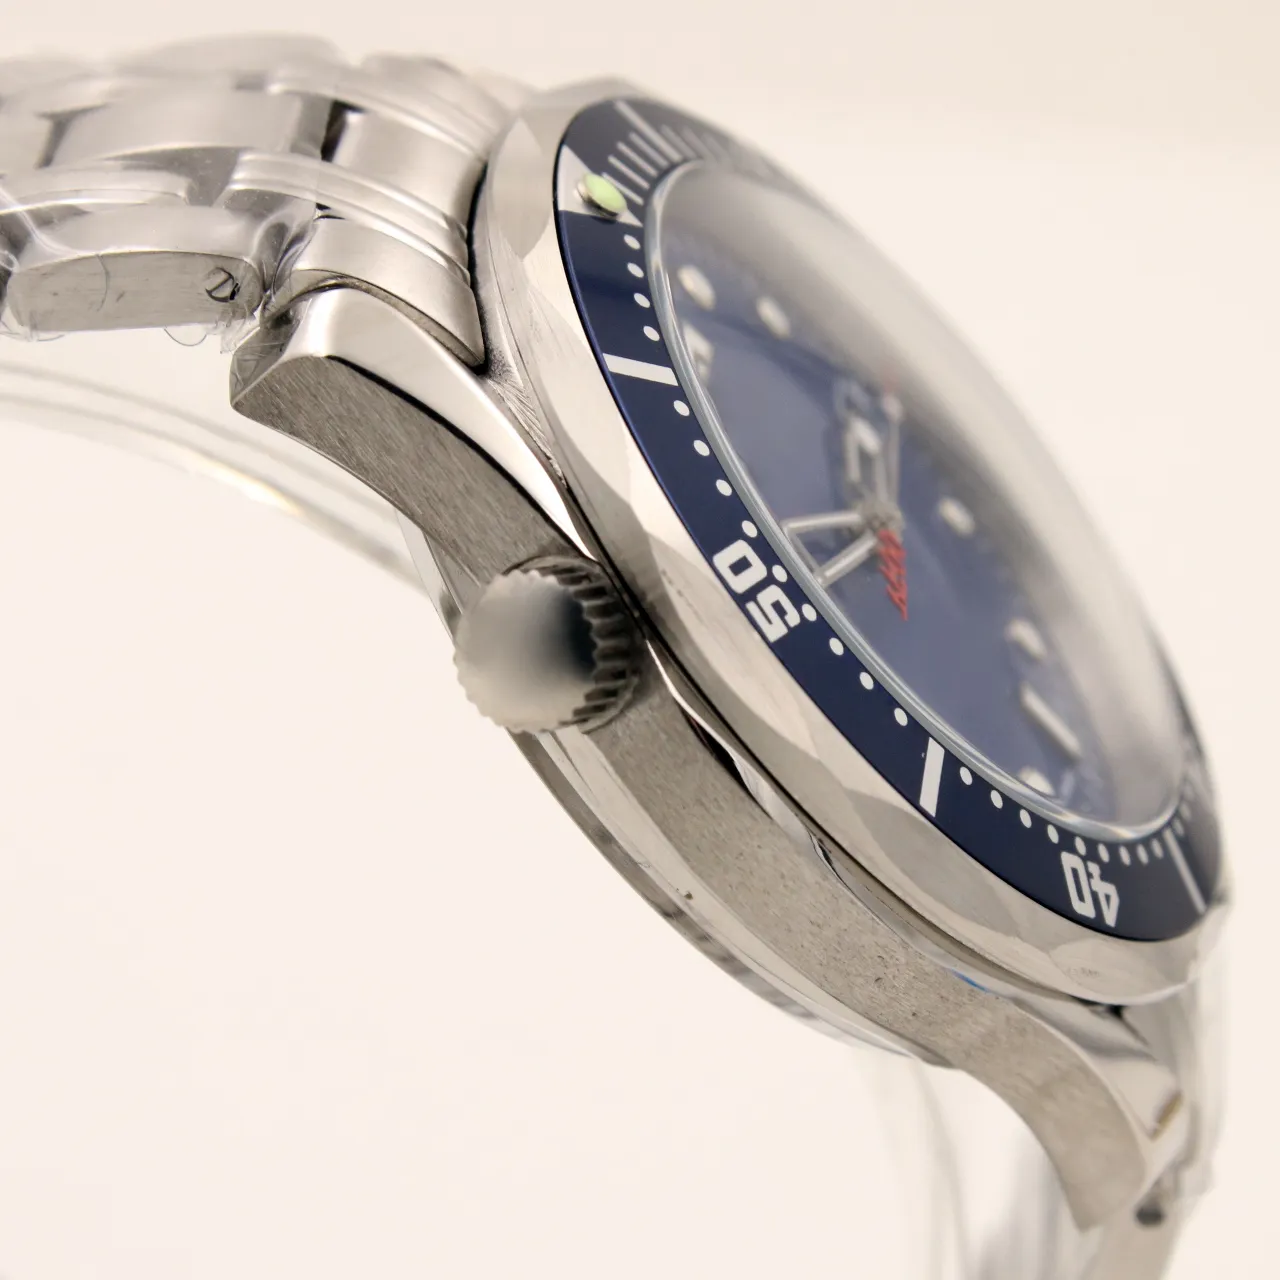 Nuovi uomini meccanici professionali 300m James Bond 007 quadrante blu zaffiro orologio automatico orologi da uomo orologi a carica automatica W291A